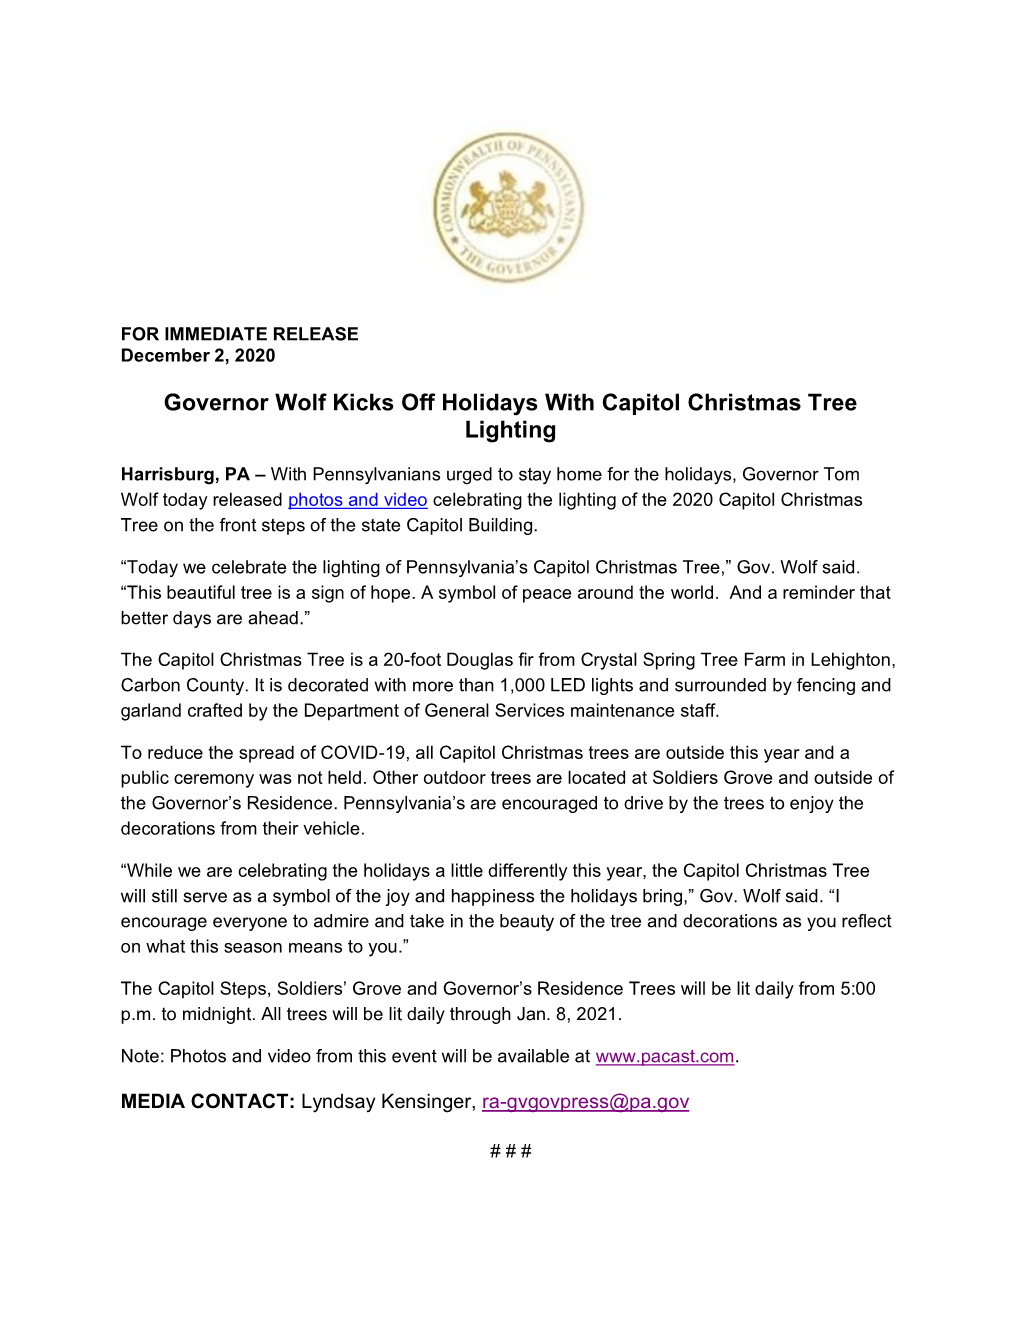 Governor Wolf Kicks Off Holidays with Capitol Christmas Tree Lighting